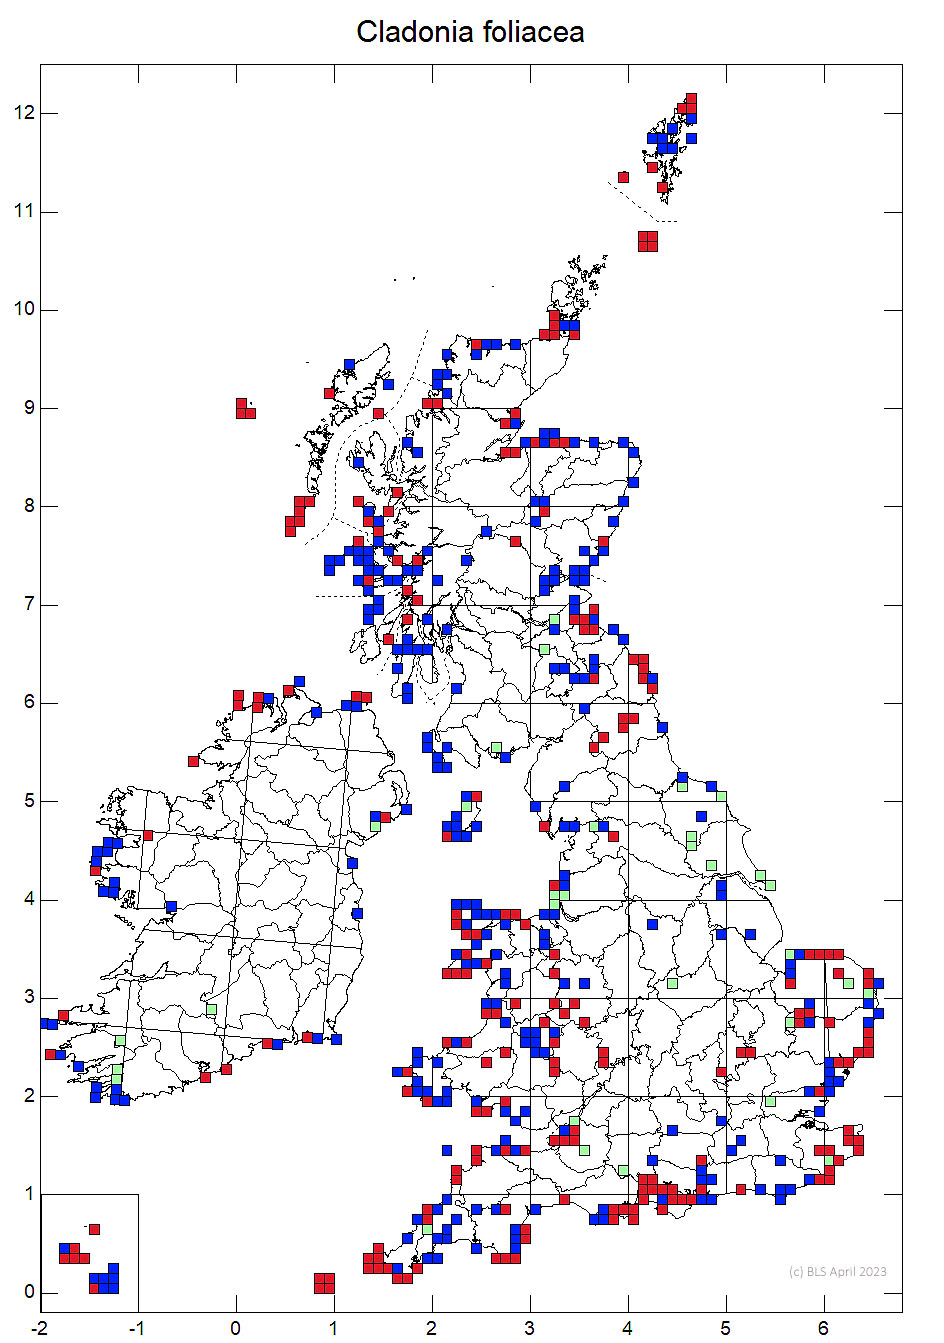 Cladonia foliacea 10km sq distribution map